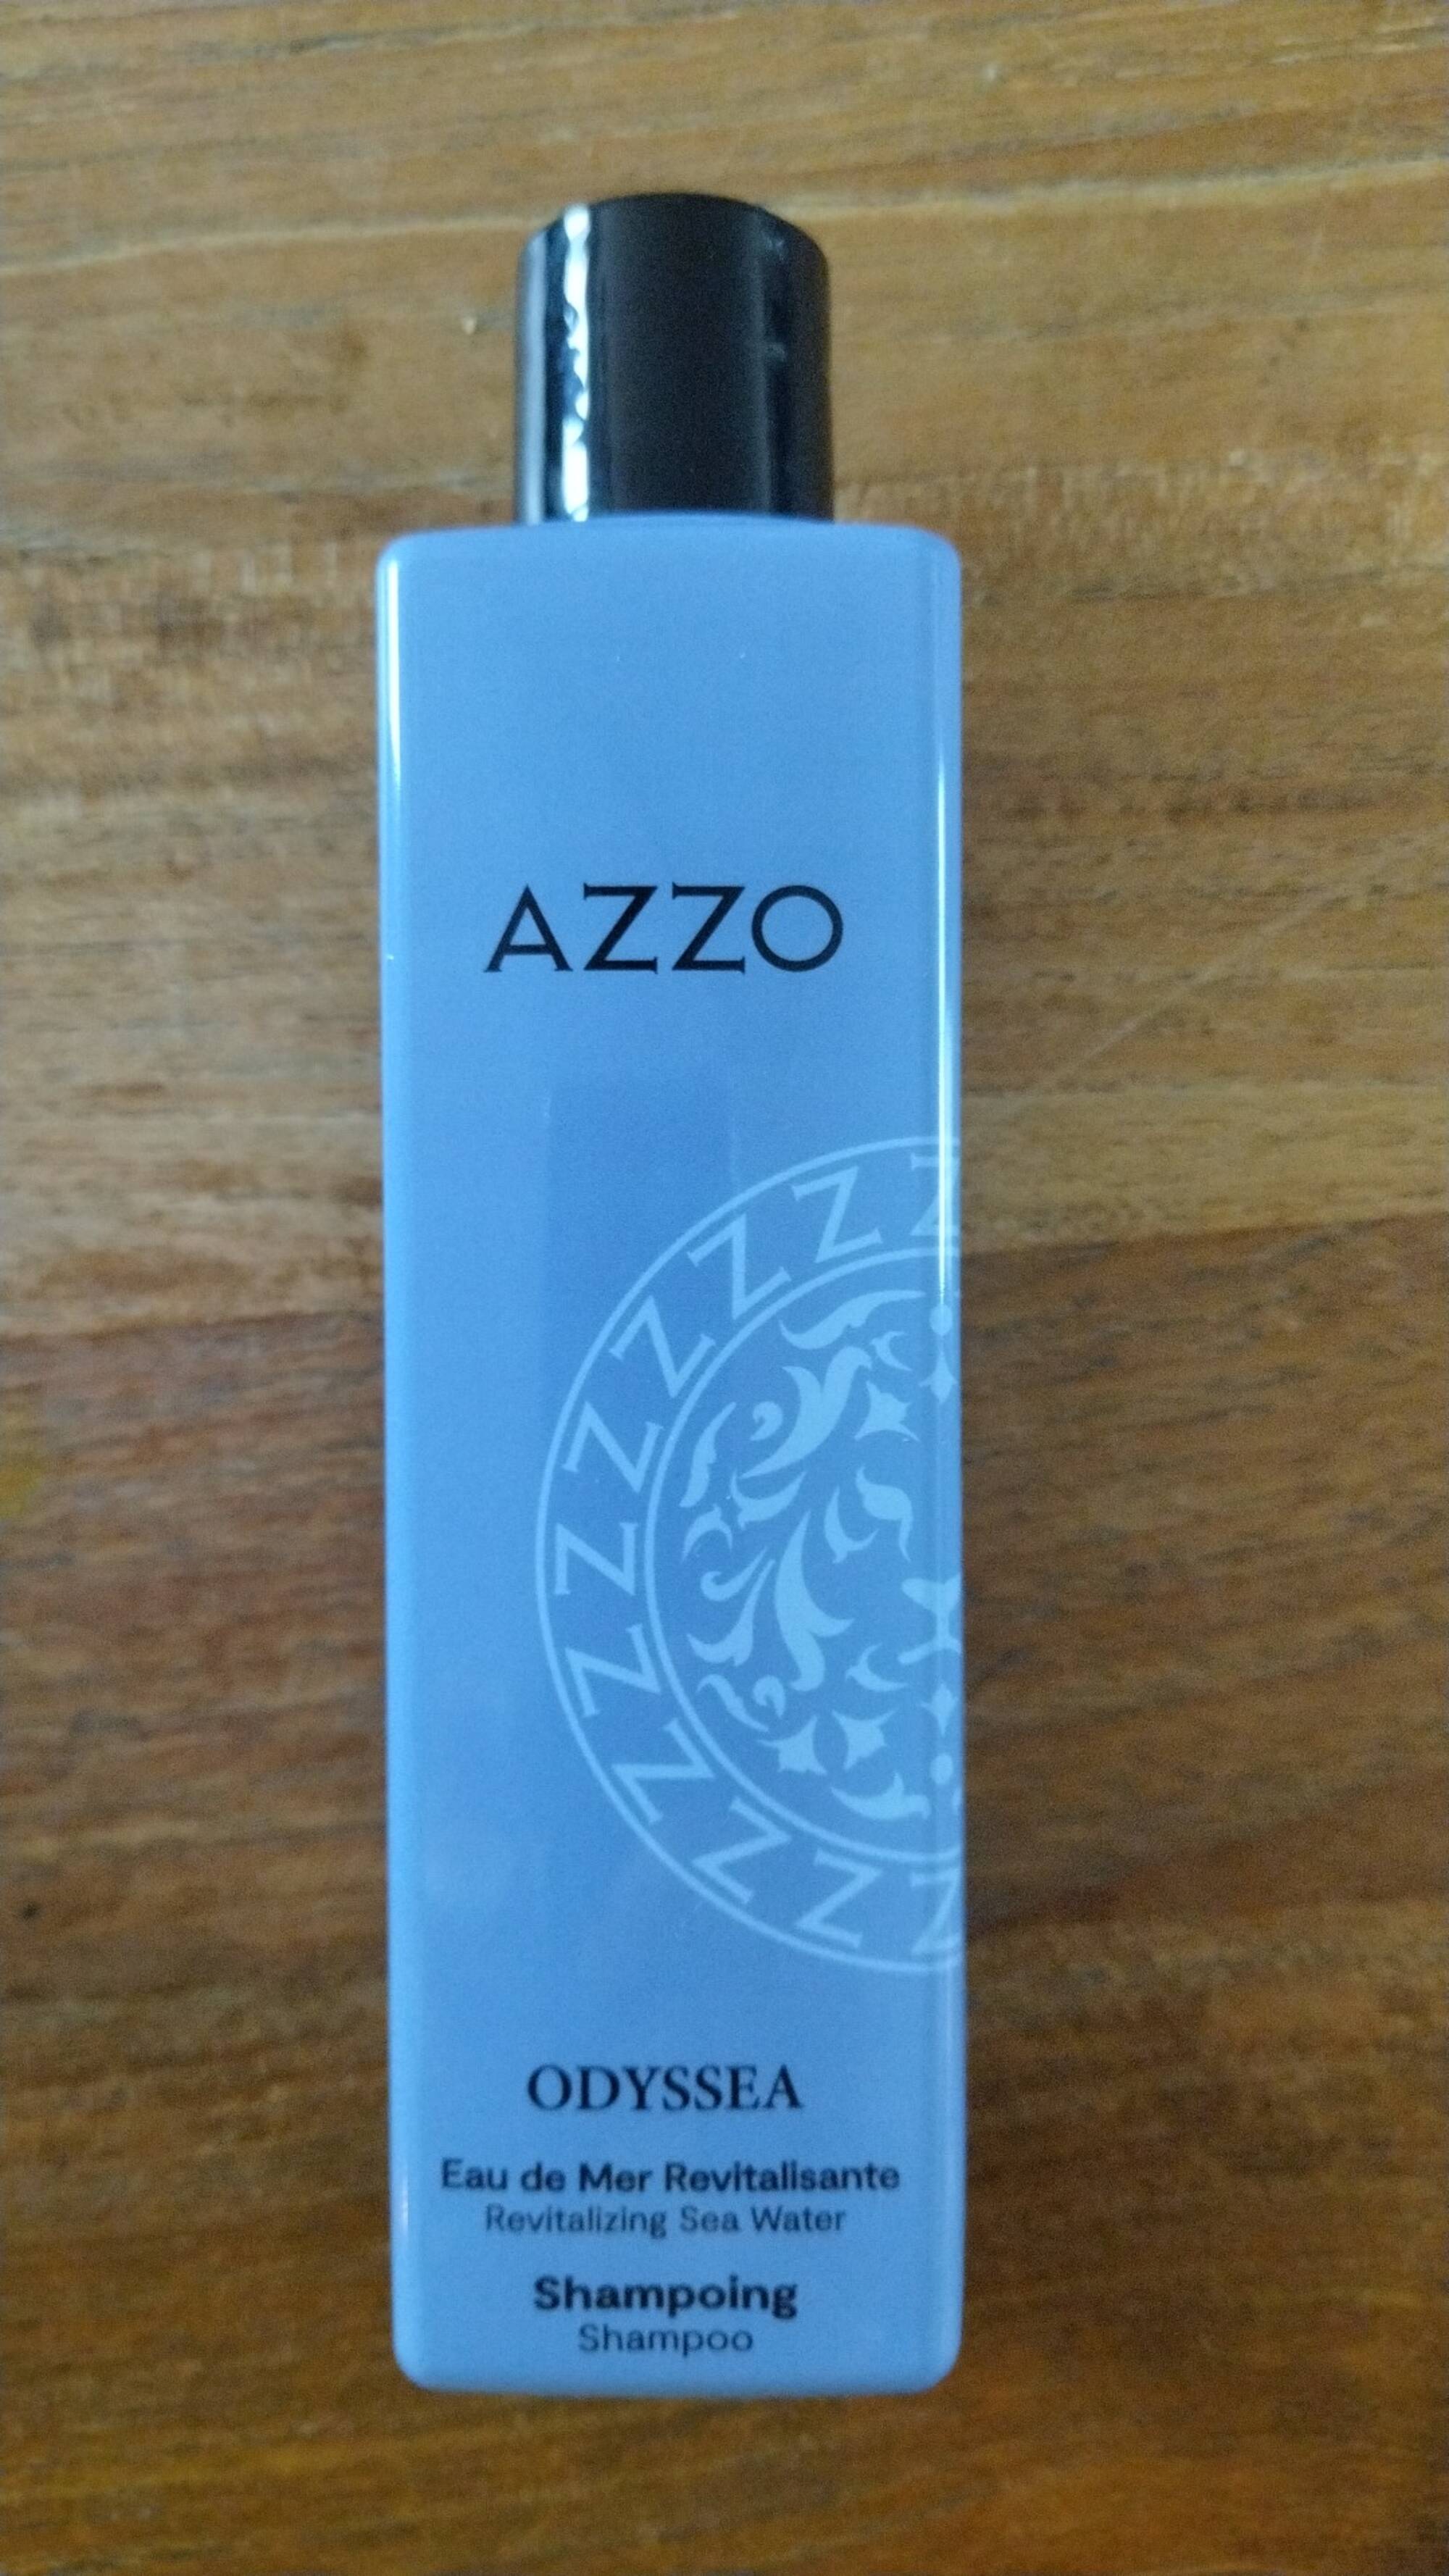 AZZO - Odyssea - Shampooing eau de mer revitalisante